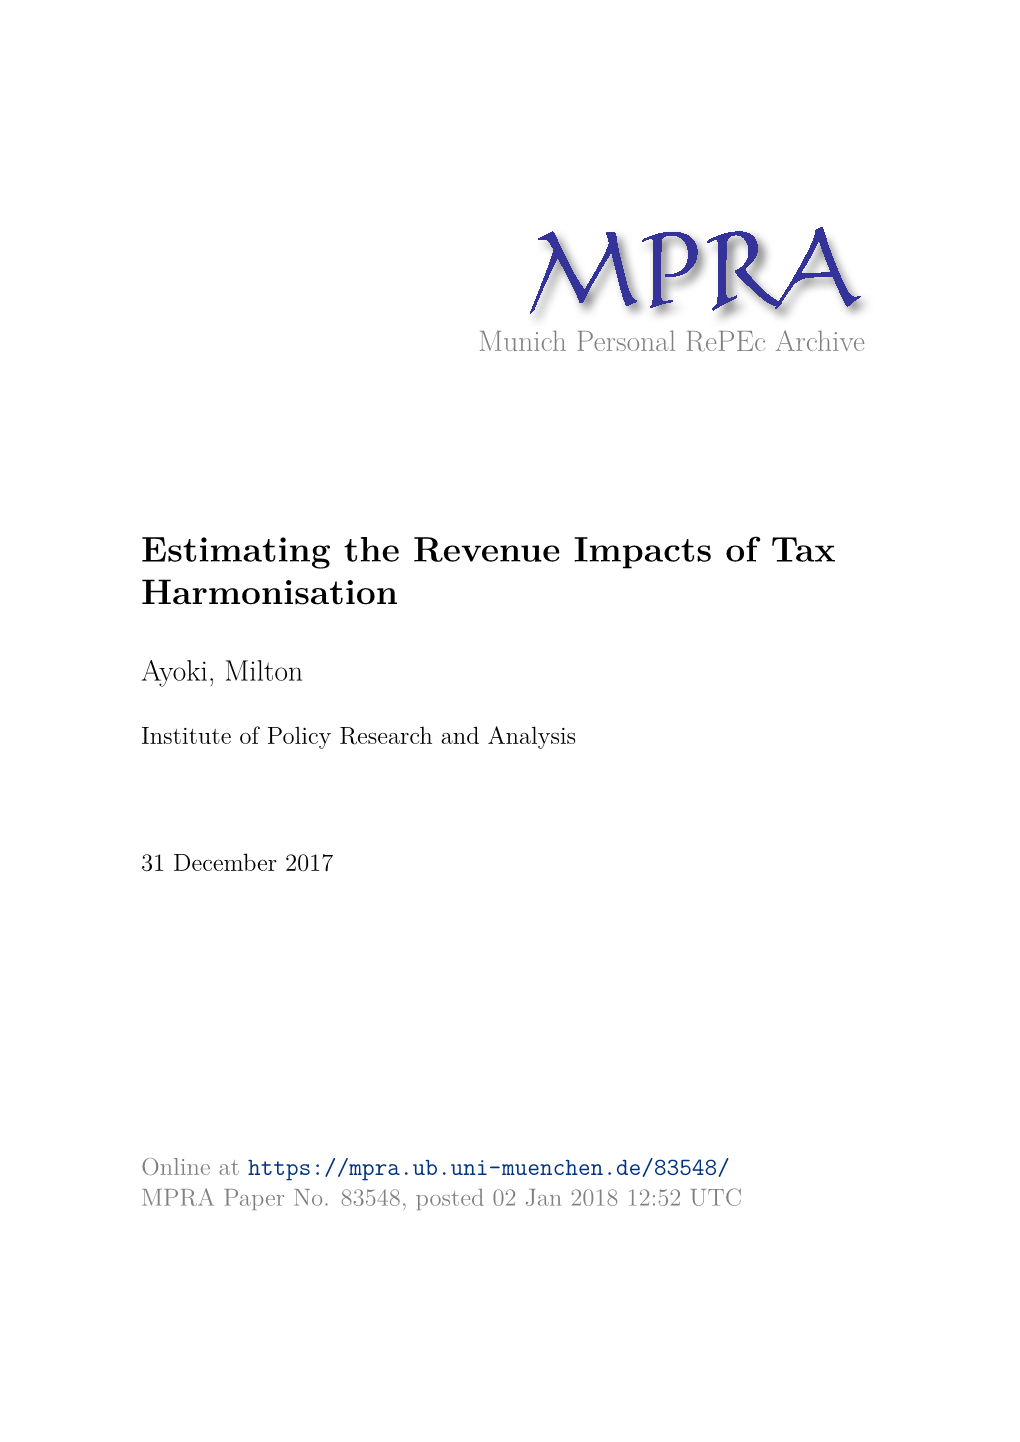 Estimating the Revenue Impacts of Tax Harmonisation